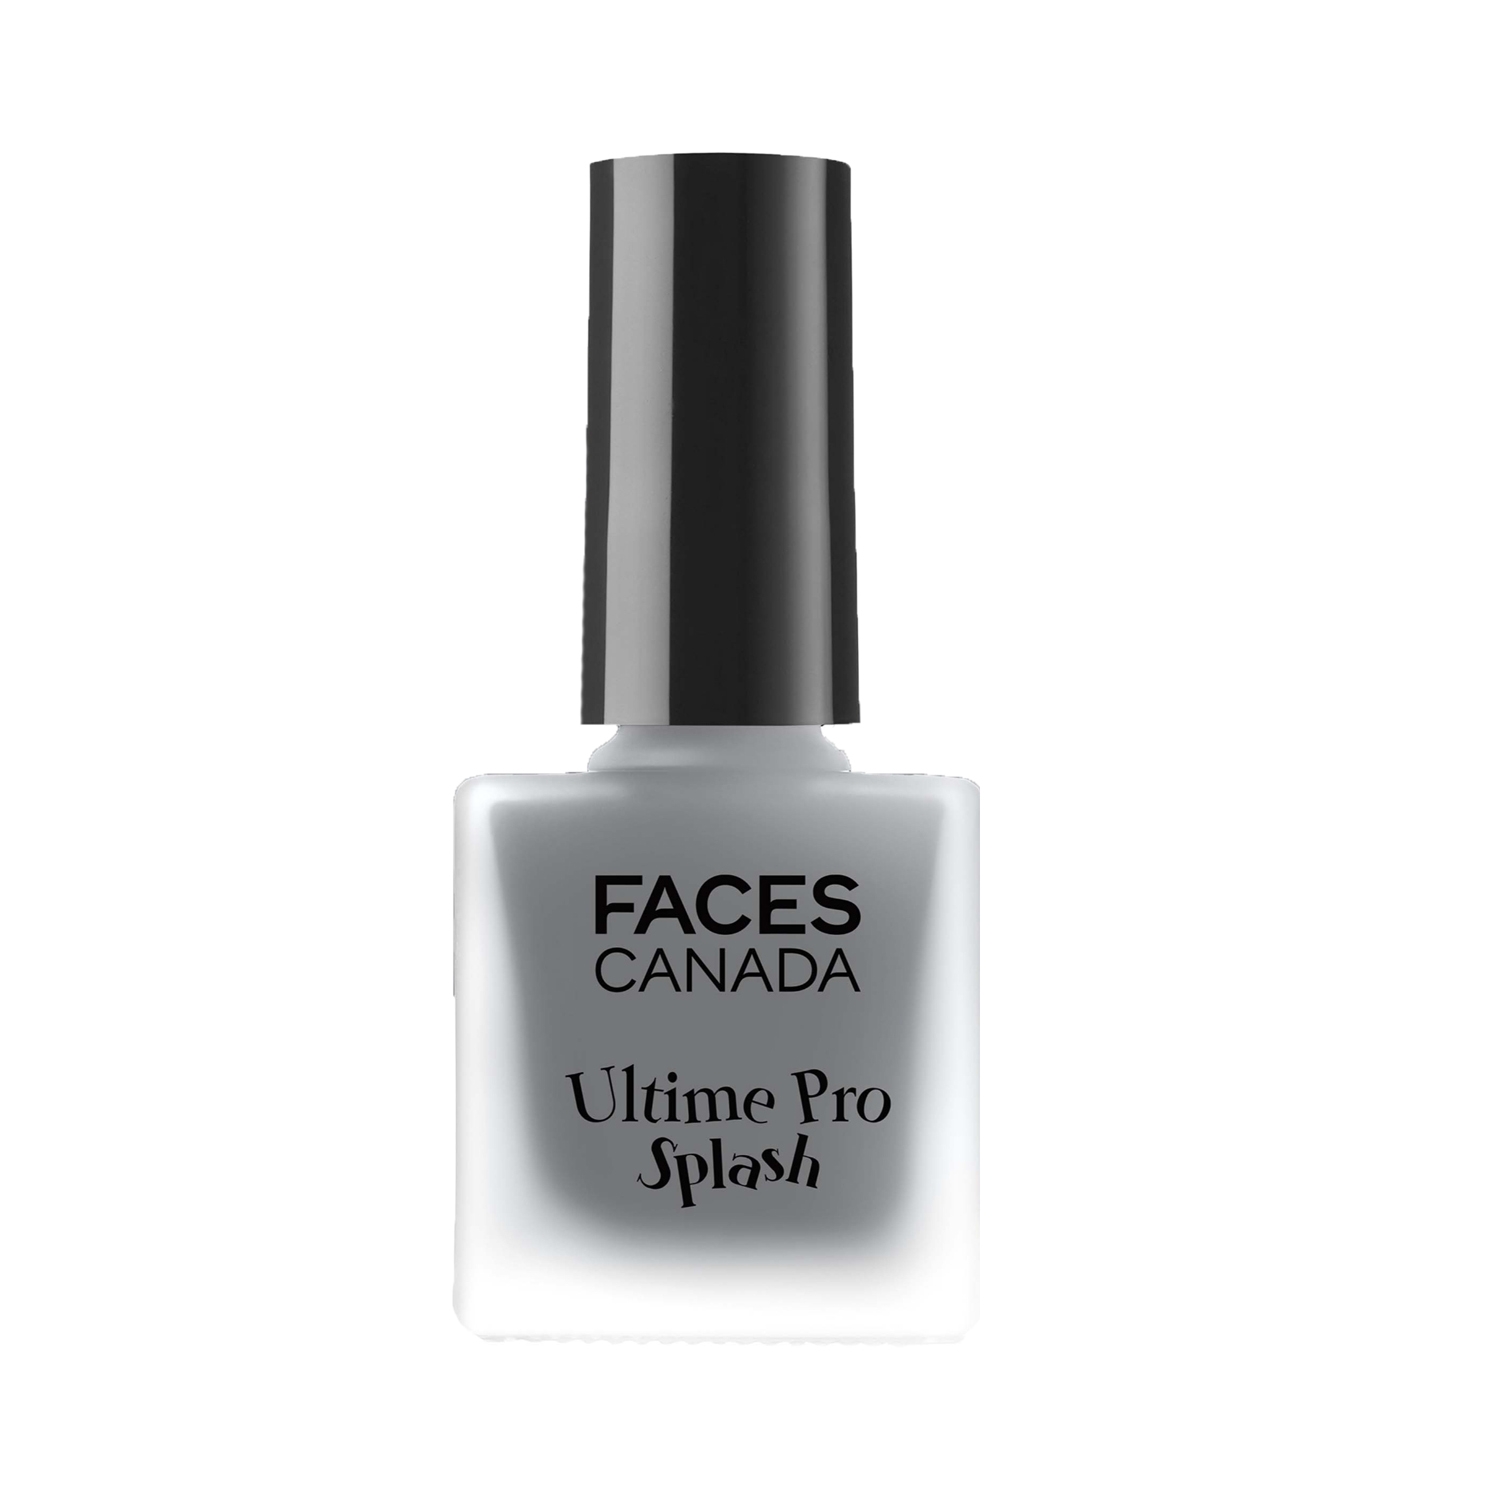 Faces Canada | Faces Canada Ultime Pro Splash Matte Nail Enamel - M01 Black Shadow (8ml)